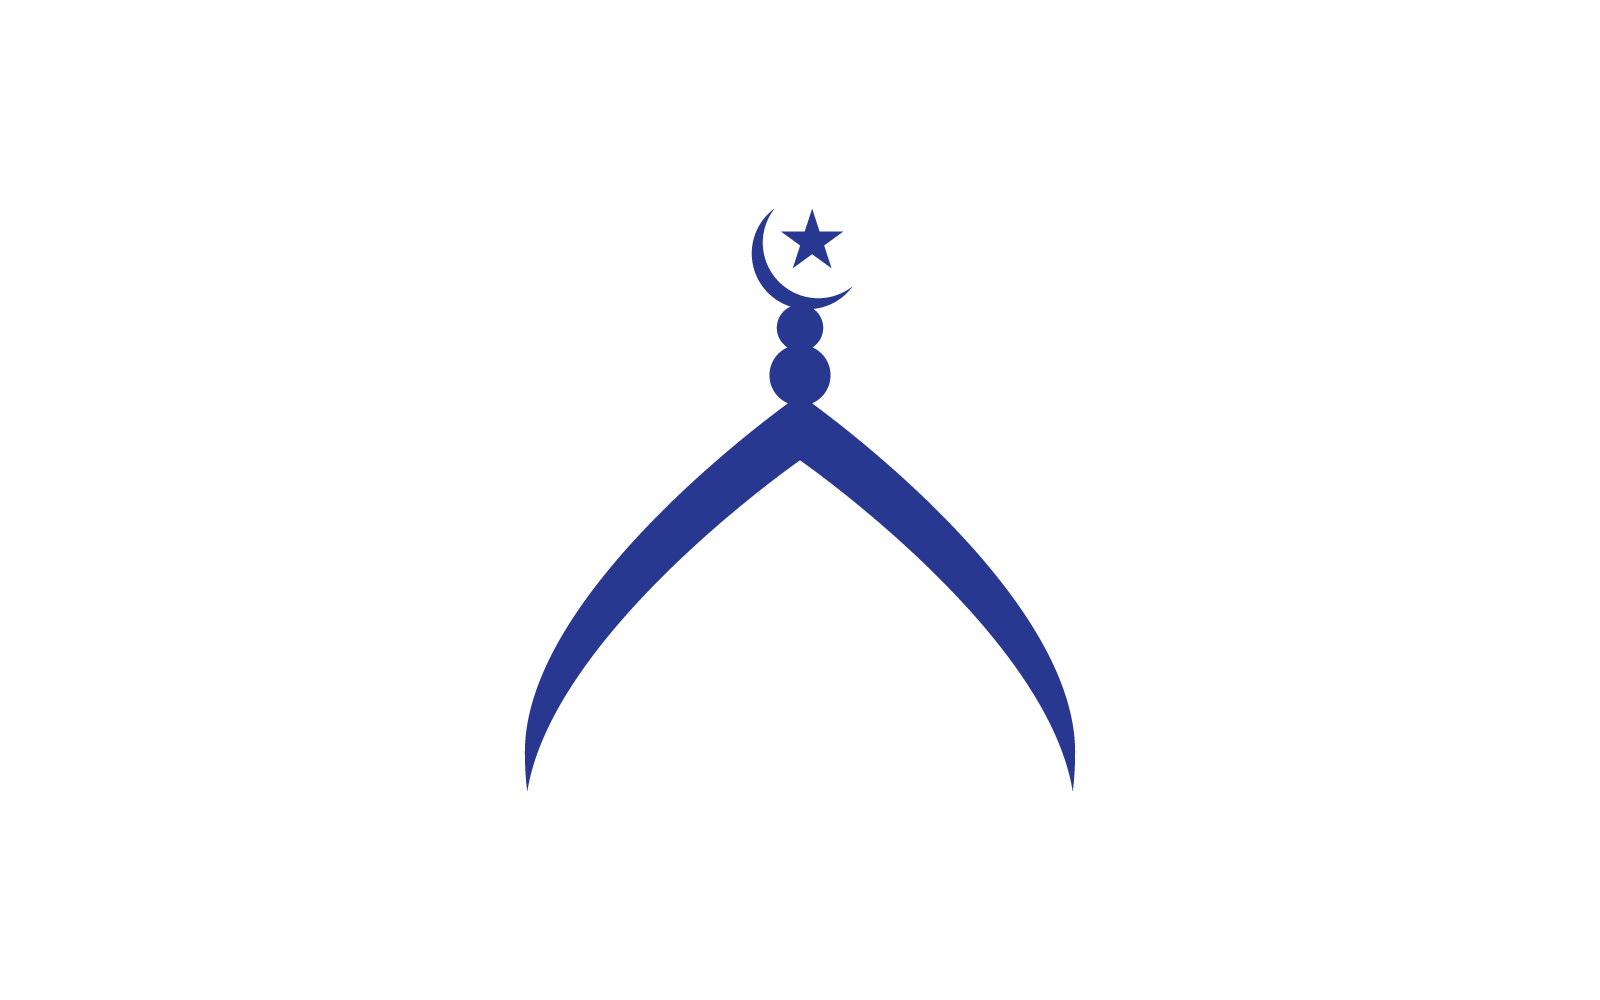 Islamic logo, Mosque,ramadhan kareem vector design template